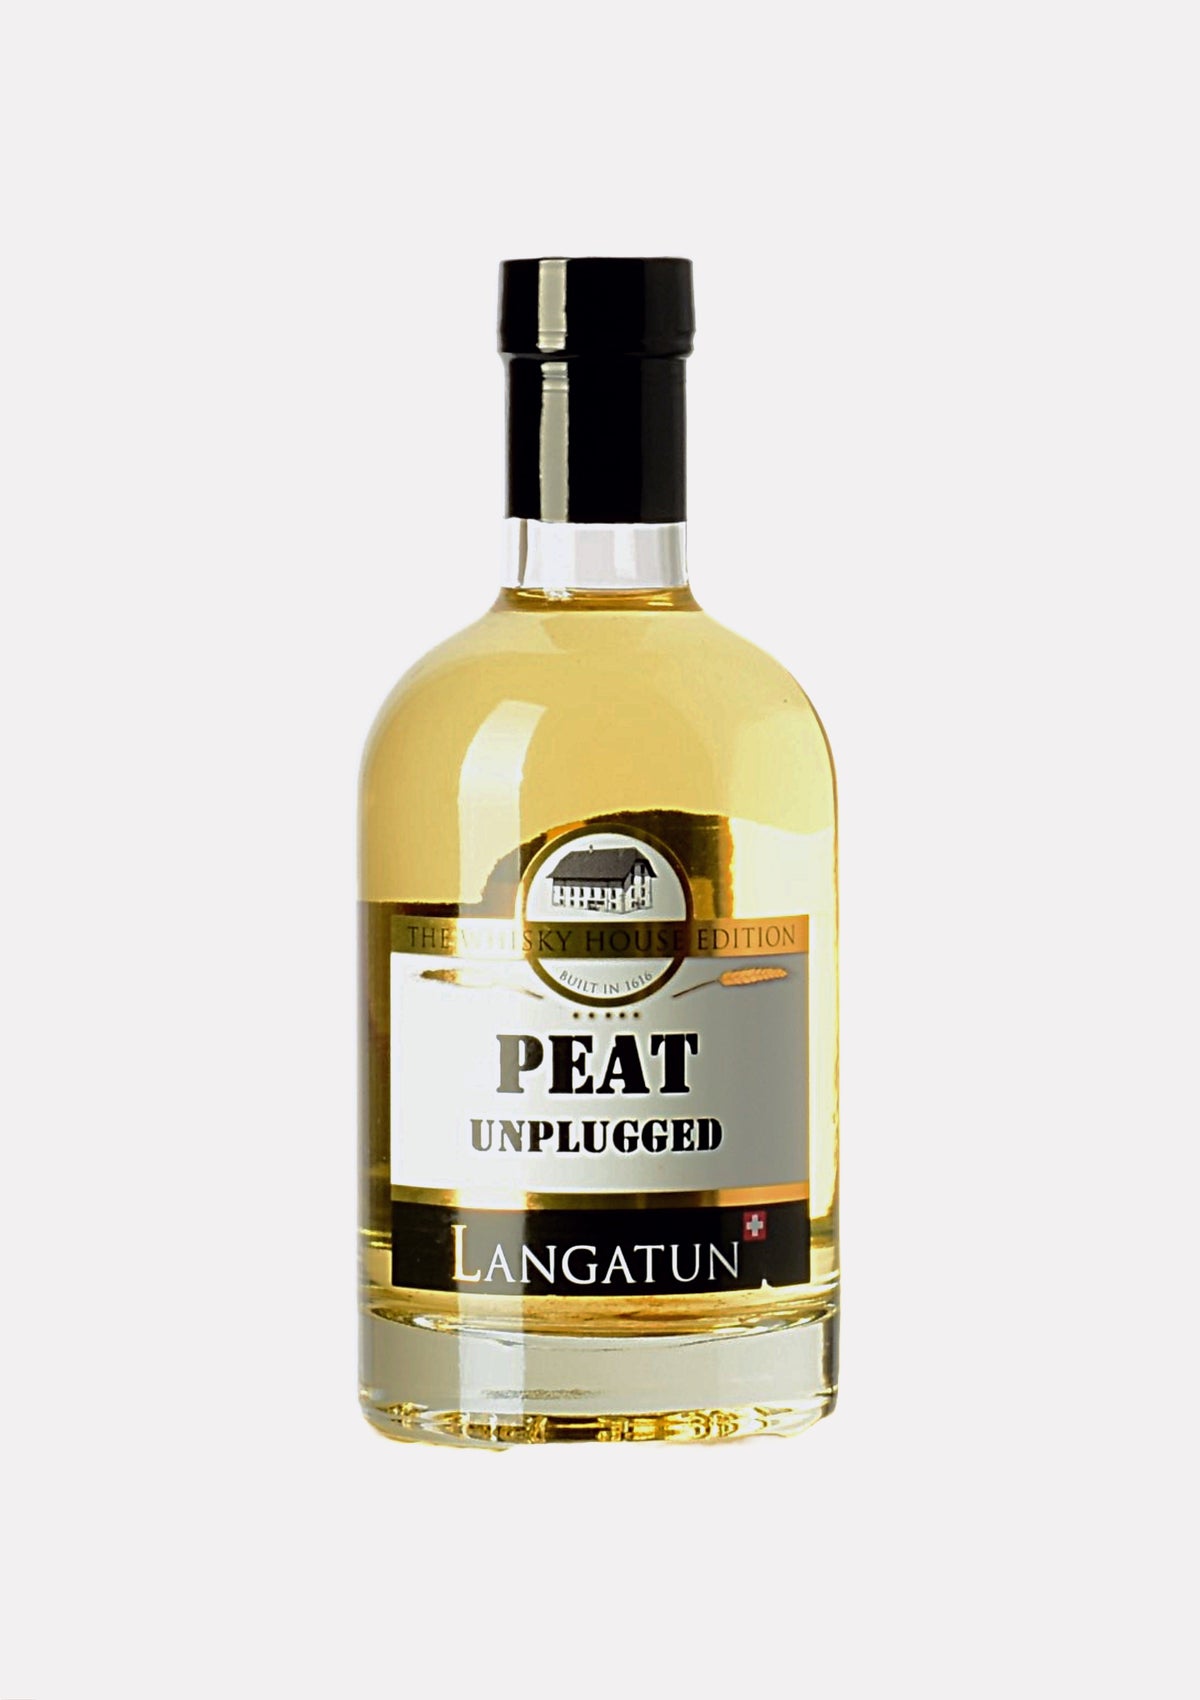 Langatun Peat Unplugged 2017 The Whisky House Edition